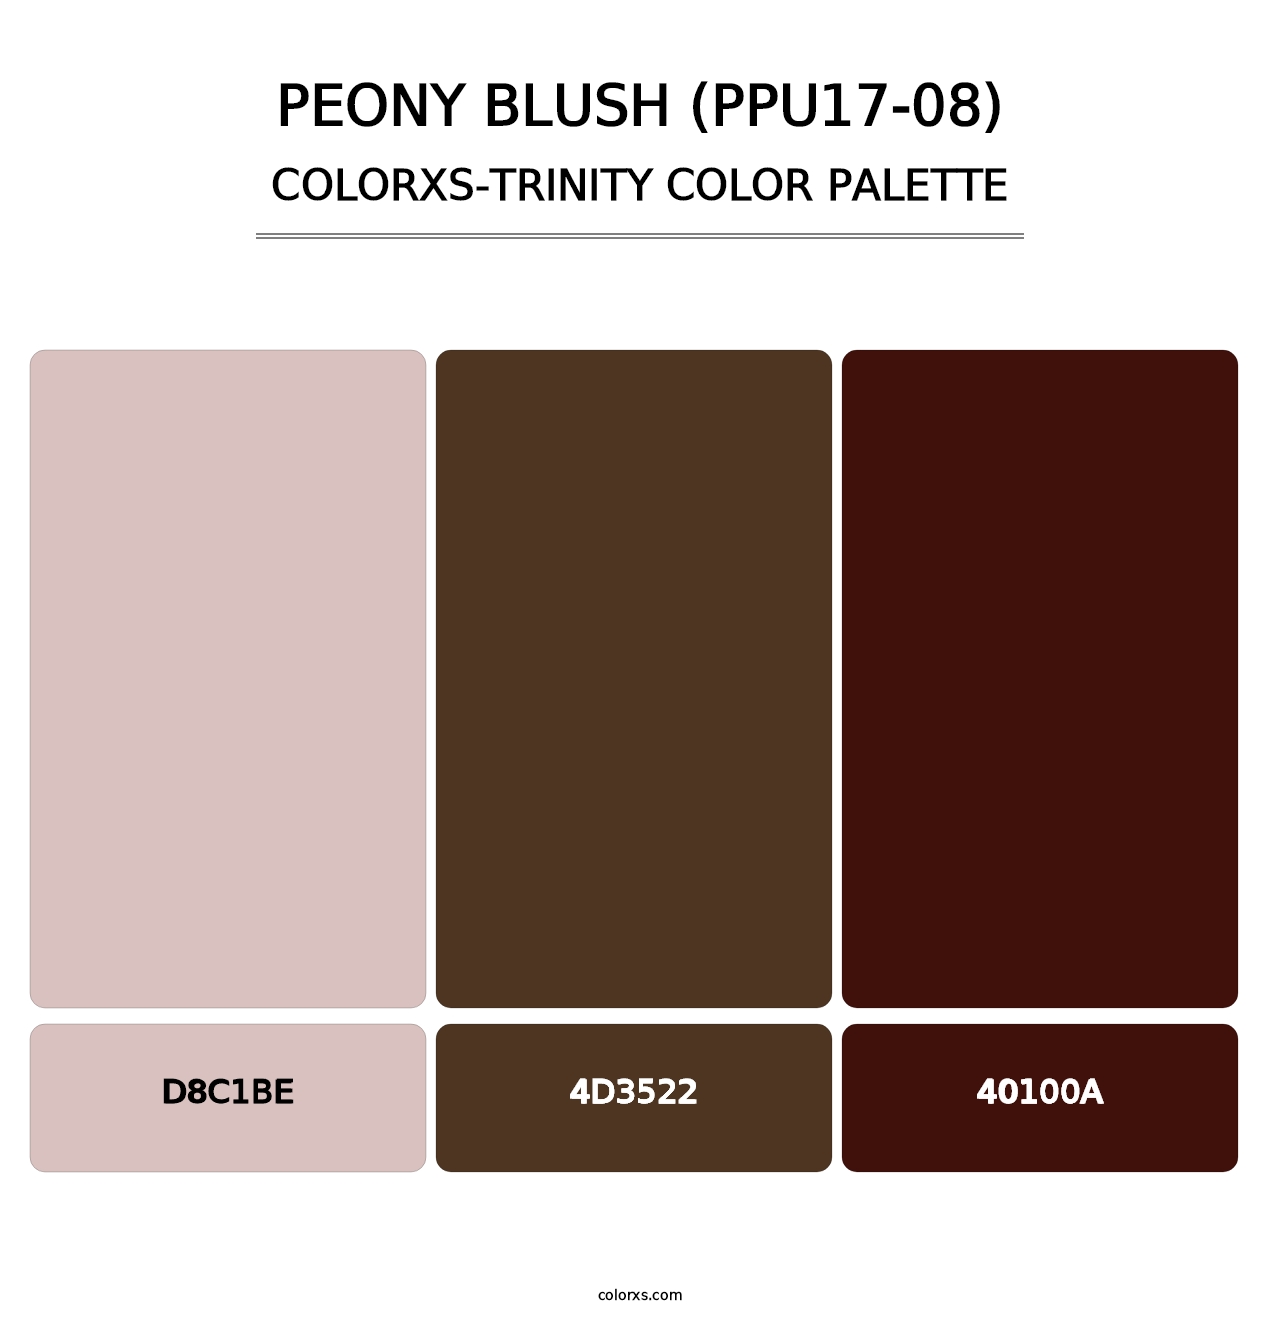 Peony Blush (PPU17-08) - Colorxs Trinity Palette